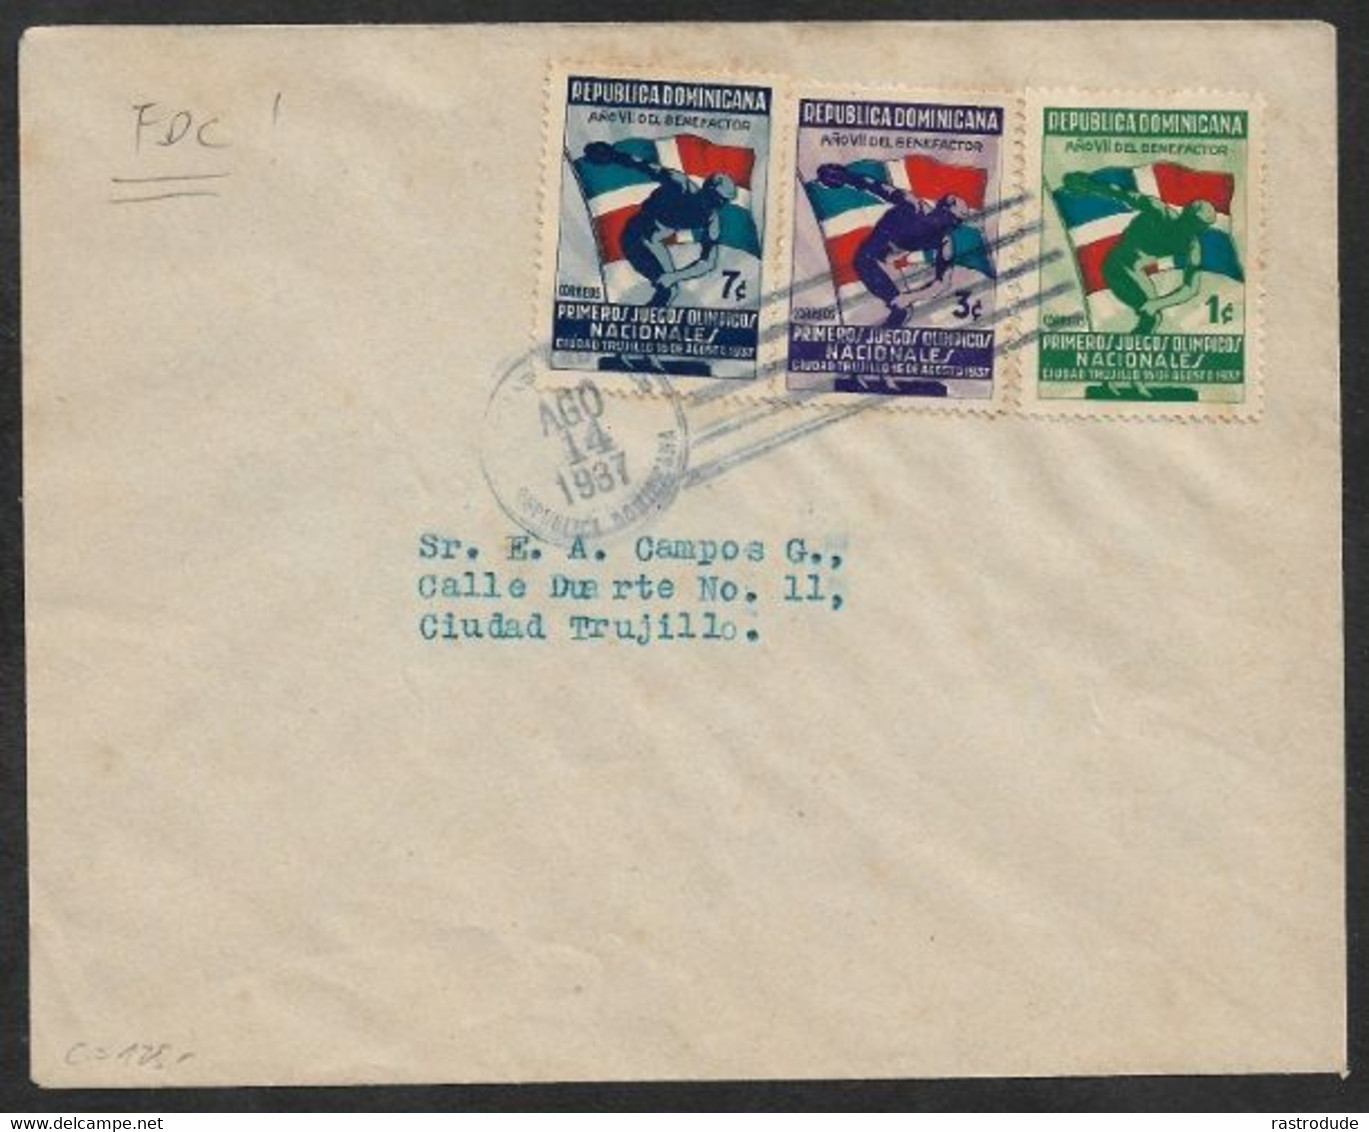 1937 AUG 14 - REPUBLICA DOMINICANA - FDC - PRIMEROS JUEGOS OLIMPICOS NAIONALES 16 AGOSTO 1937 - RARE - Dominican Republic